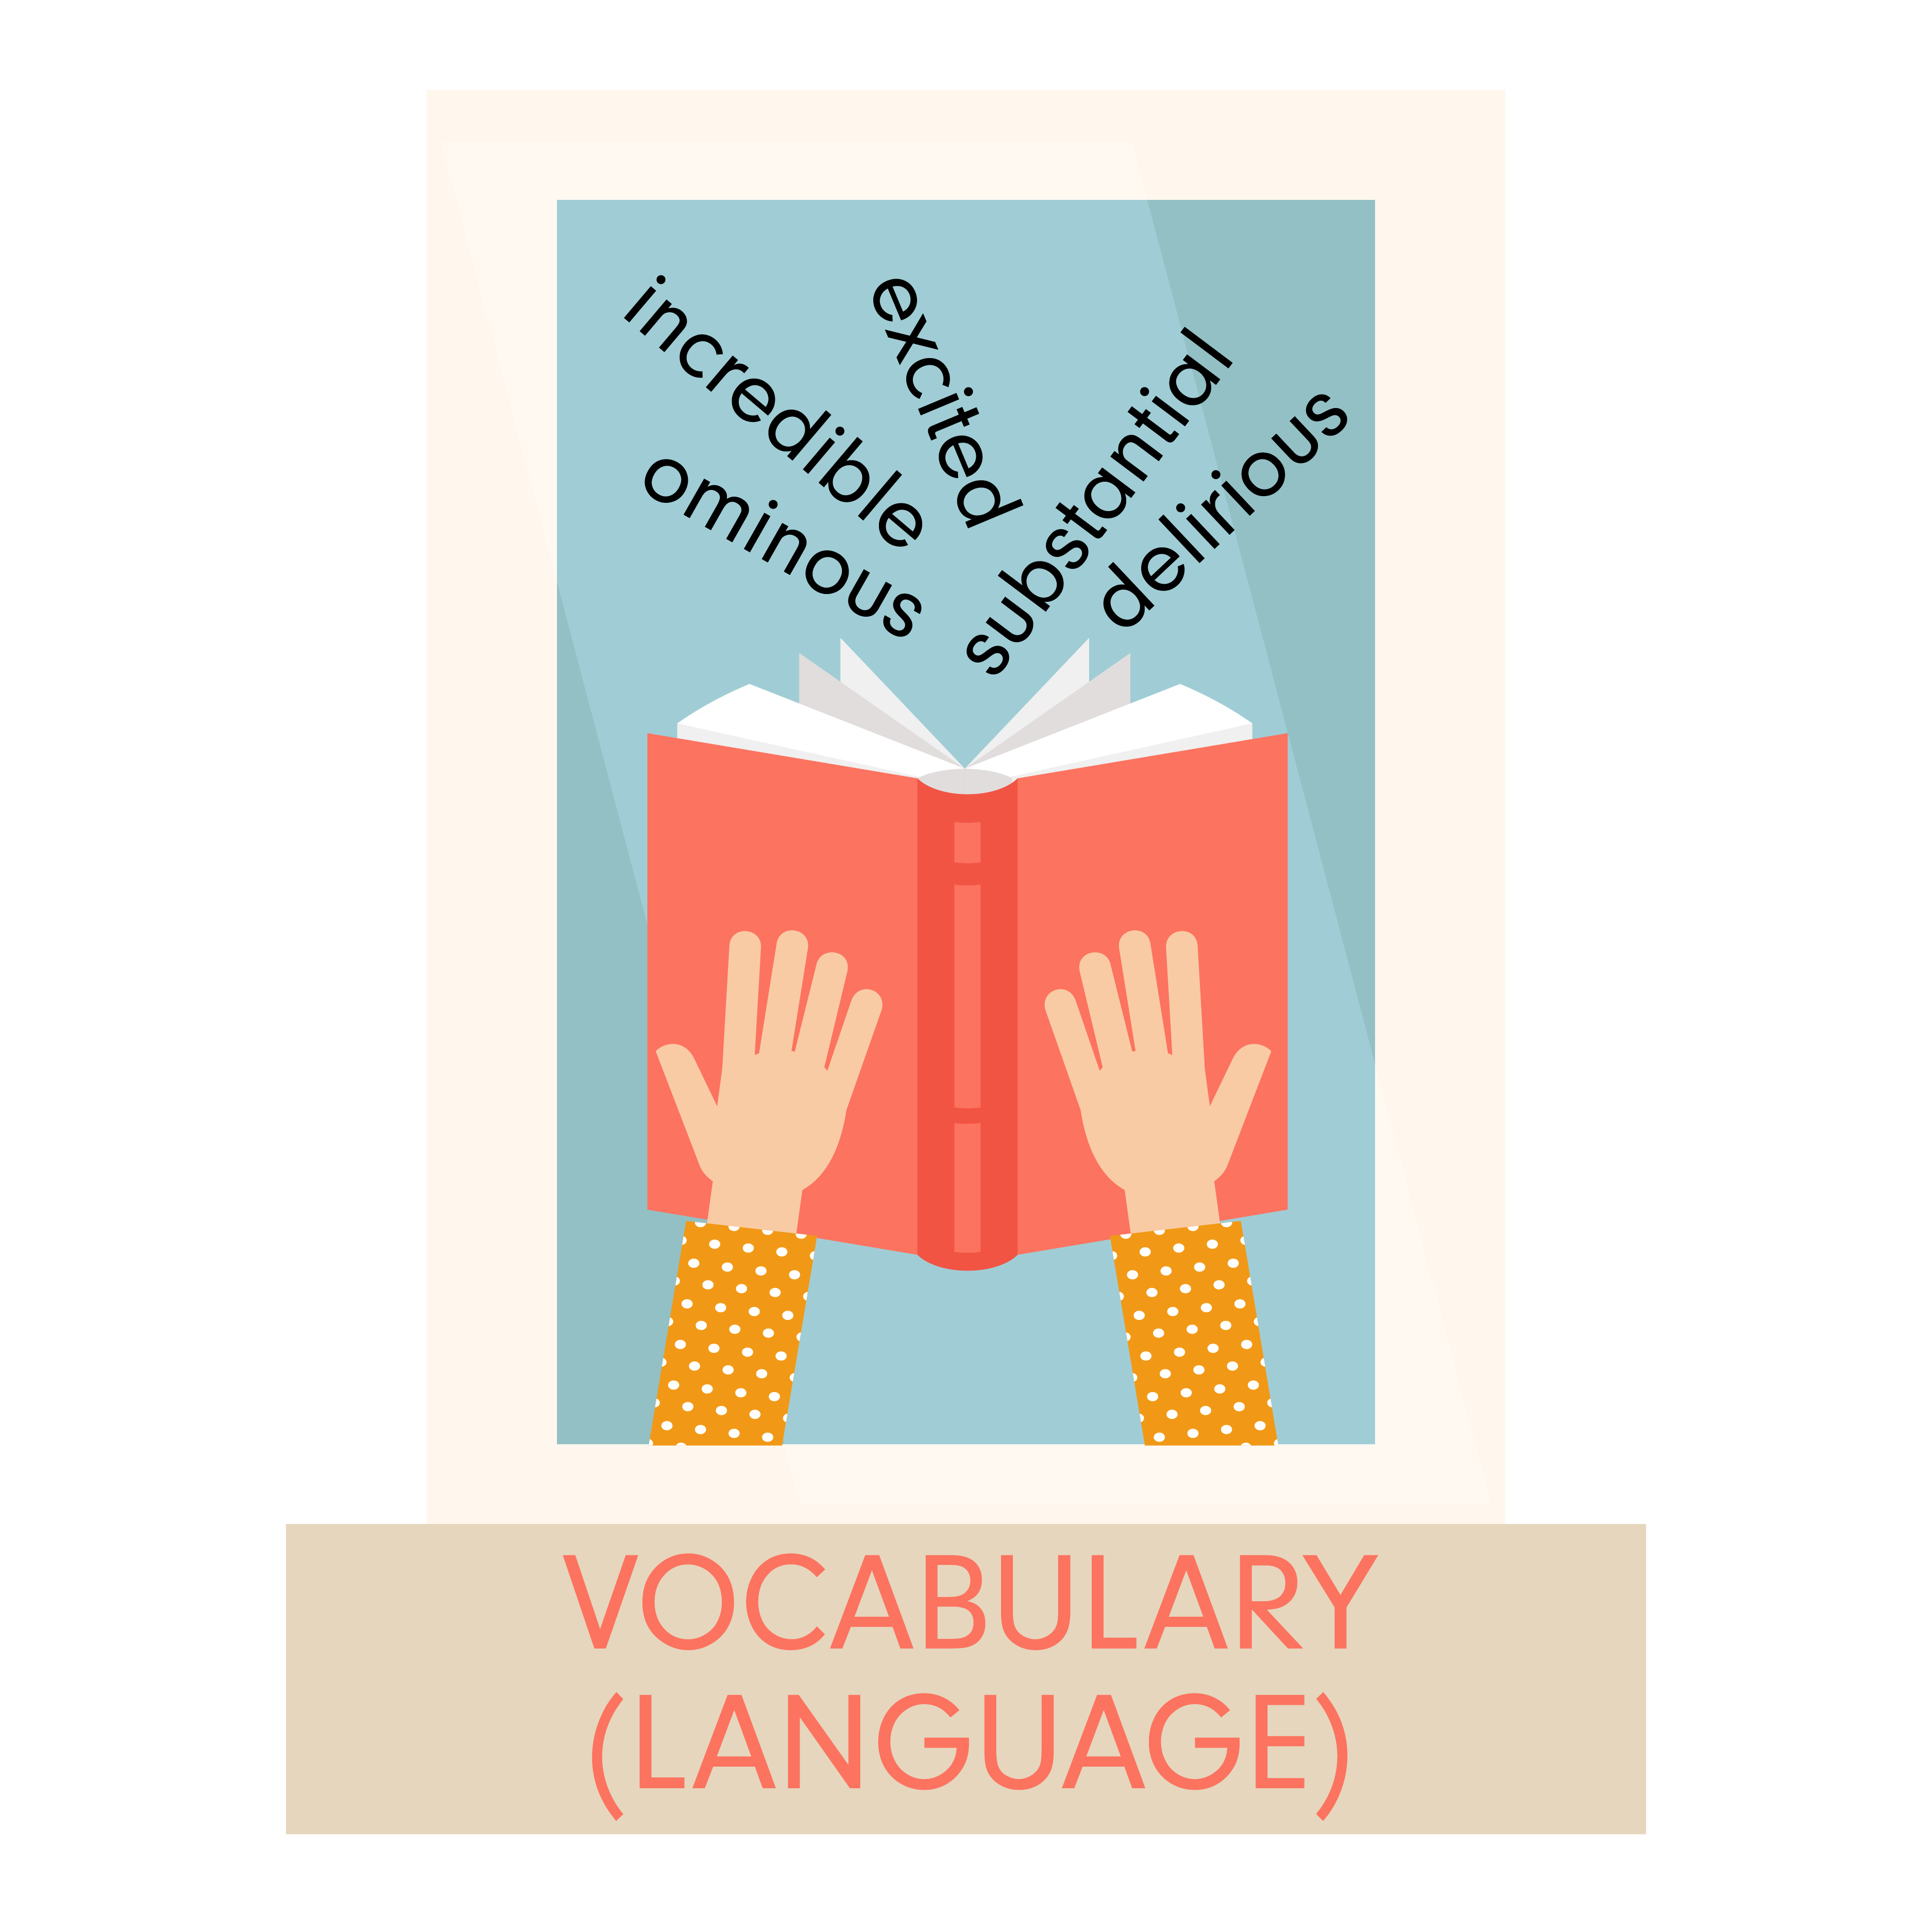 VOCABULARY language